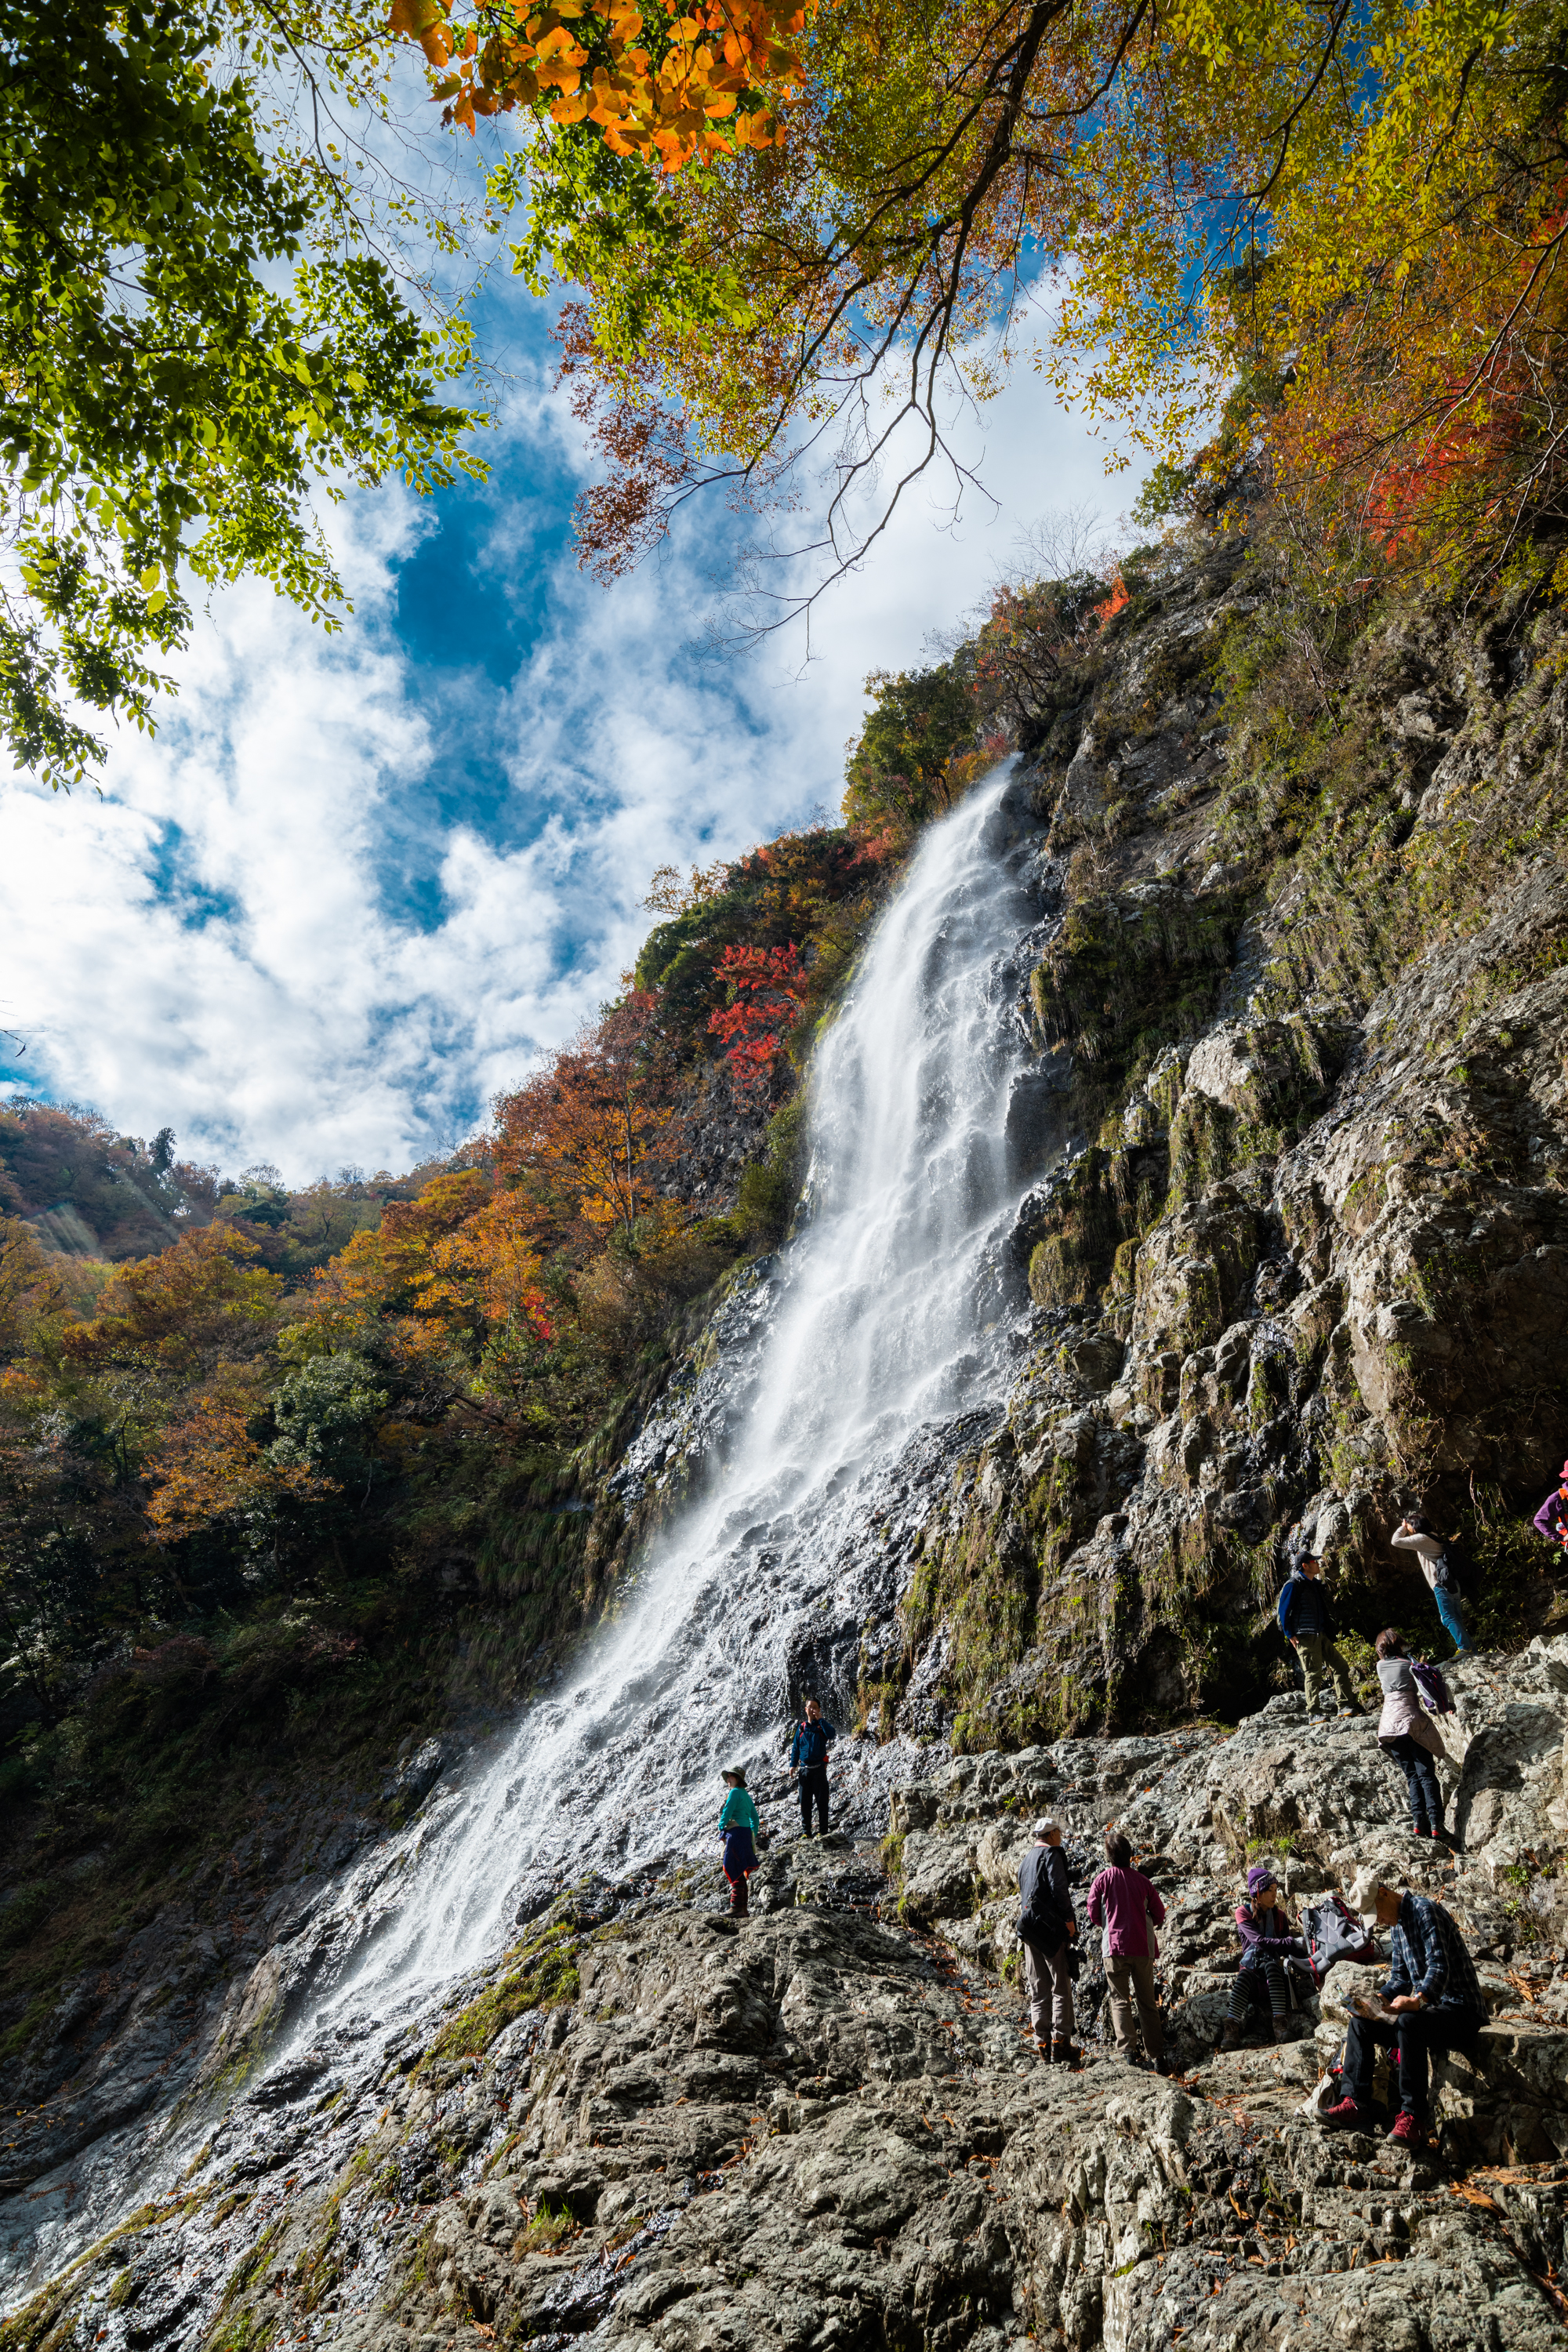 NIKON-CORPORATION_NIKON-D850_2484830322-2484947775_19920 兵庫県  天滝 (兵庫県一の落差を誇る紅葉景色の美しい絶景の滝 !撮影した写真の紹介、 アクセス情報や撮影ポイントなど!)　